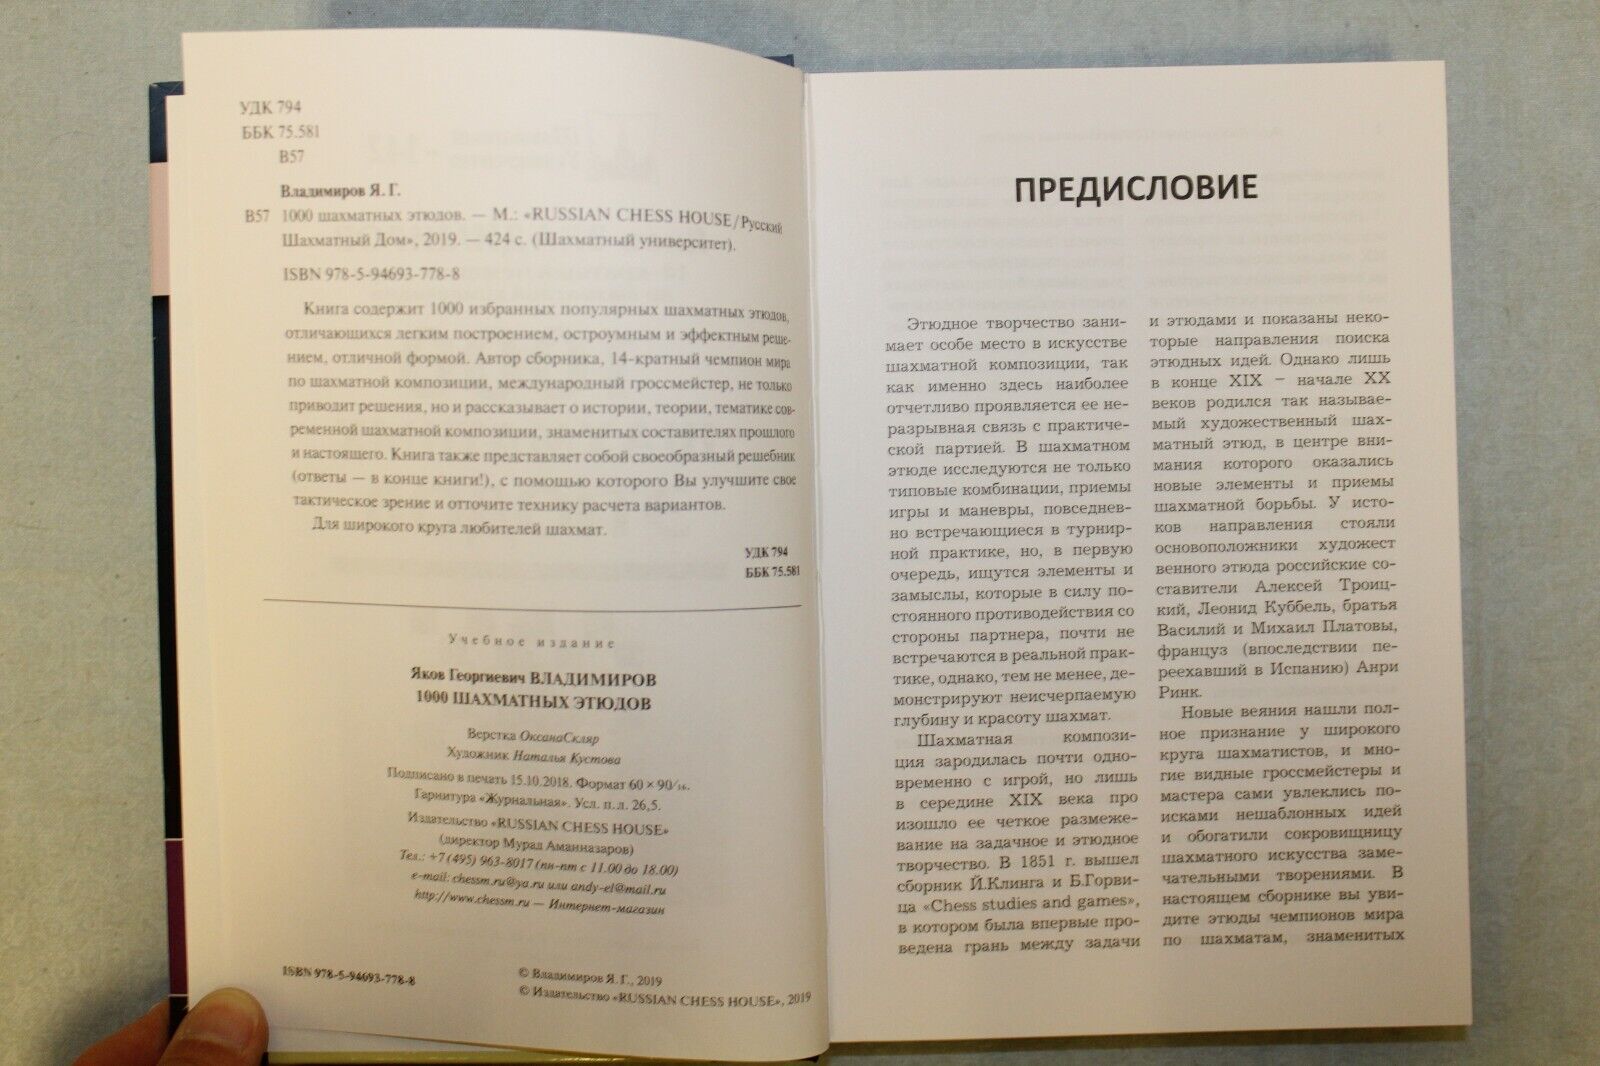 10669.2 Books by Y. Vladimirov: 1000 Chess Problems & 1000 Chess Studies